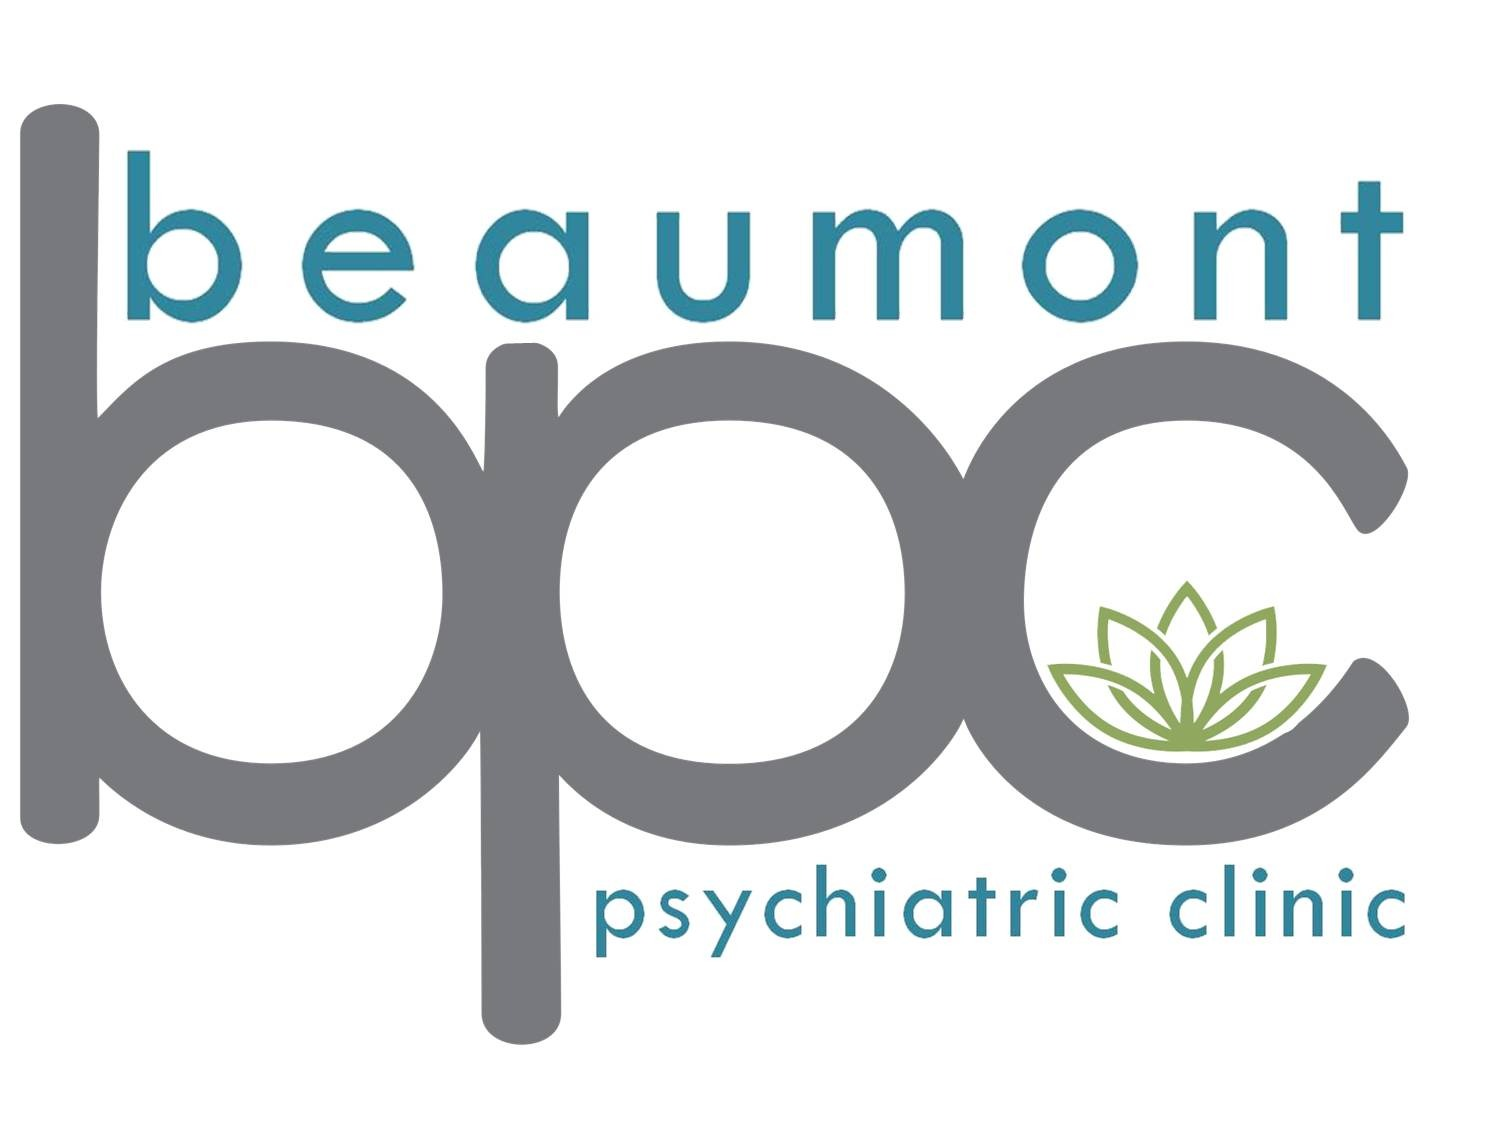 Beaumont Psychiatric Clinic